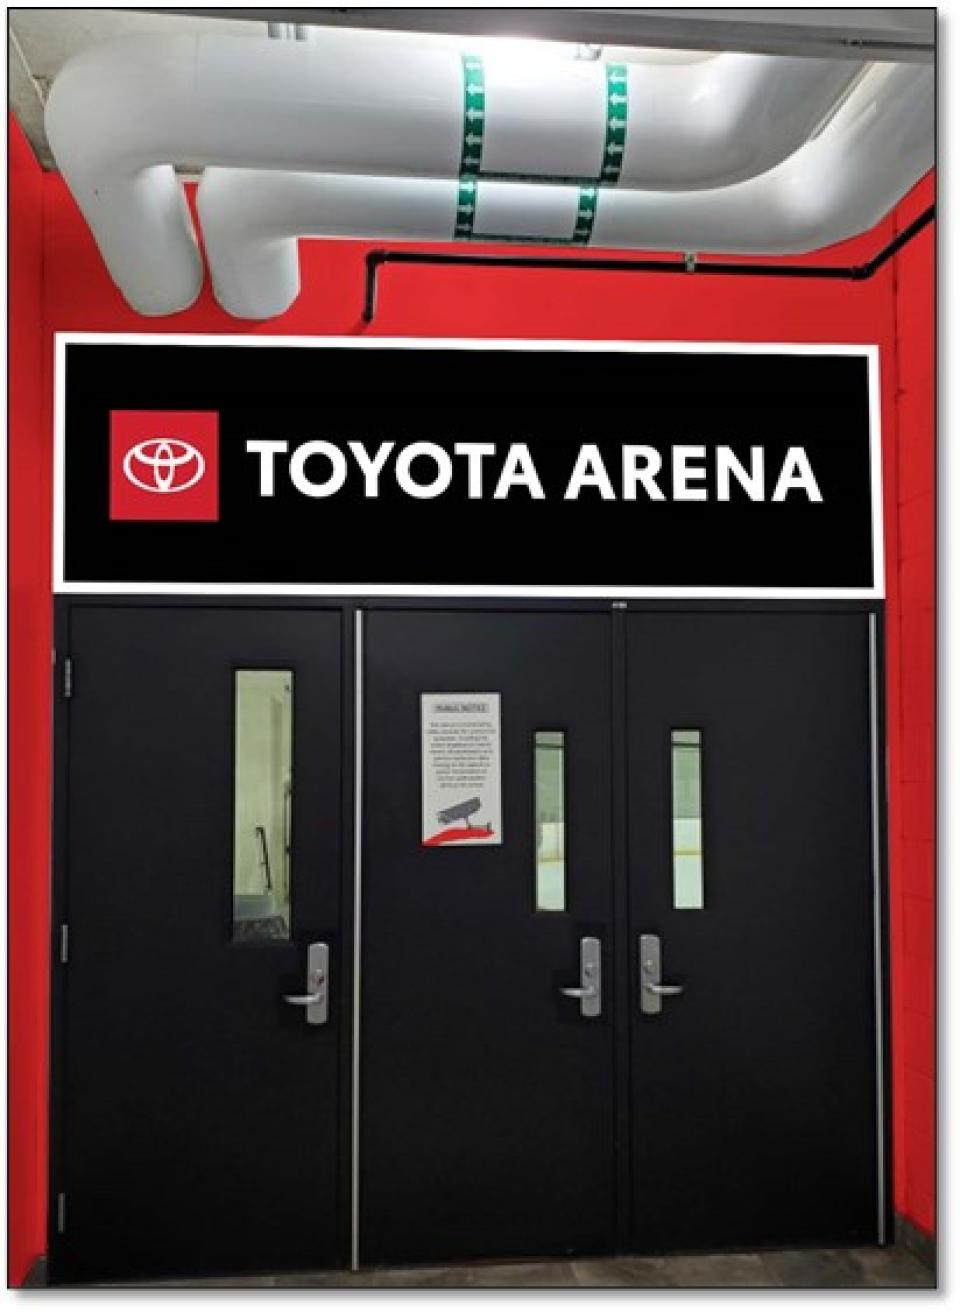 potential sponsorship designs inside Graham Arena by Toyota.